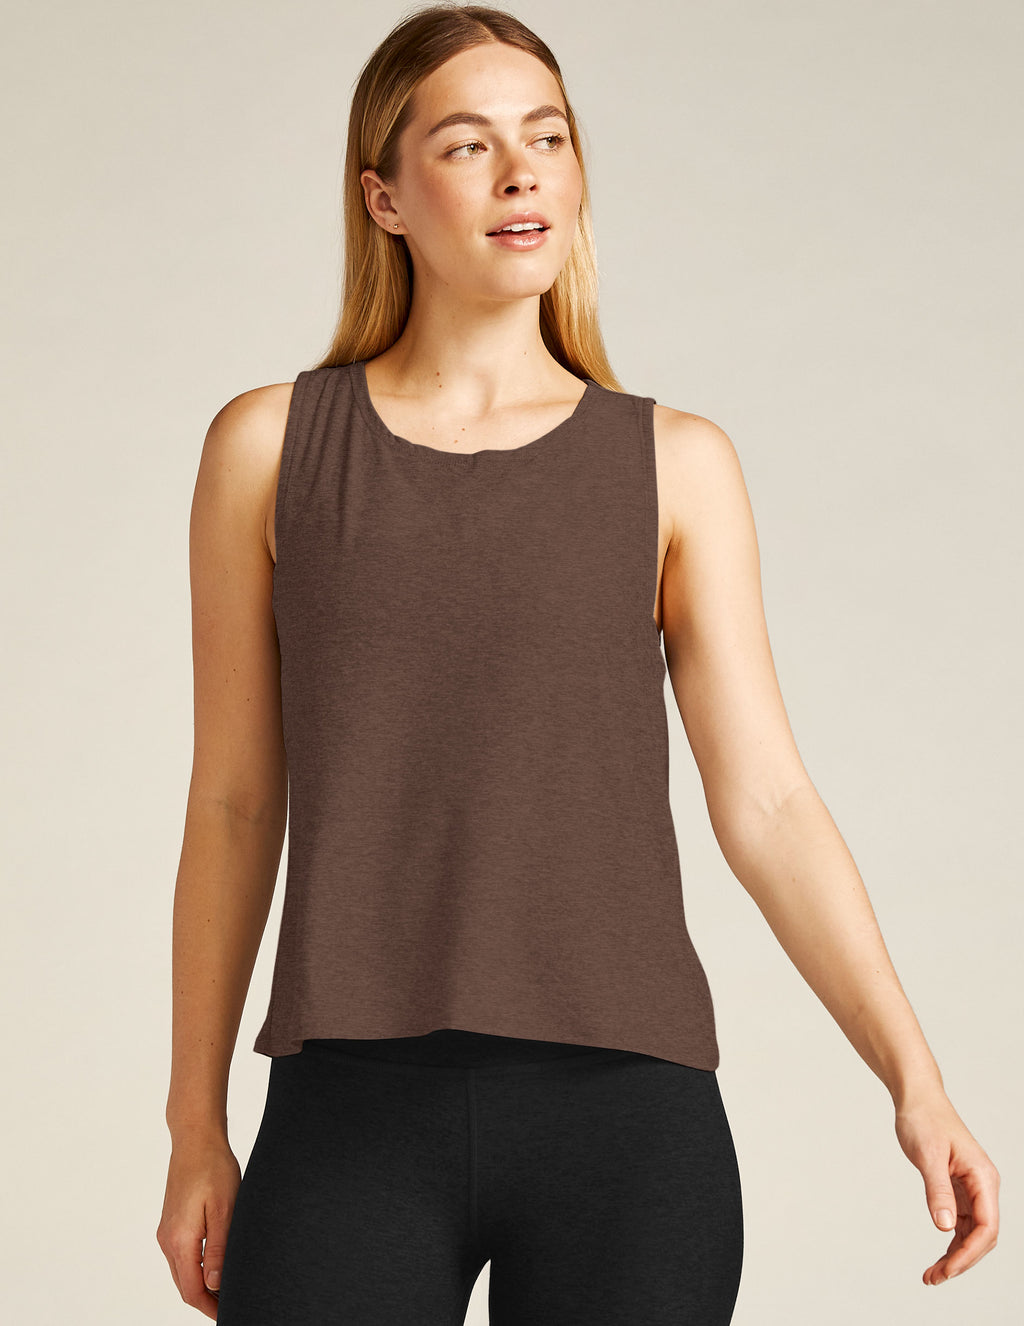 Colorfulkoala Women's Tank Tops Body Contour Sleeveless Crop Double Lined  Yoga Shirts(XS, Ivory) 